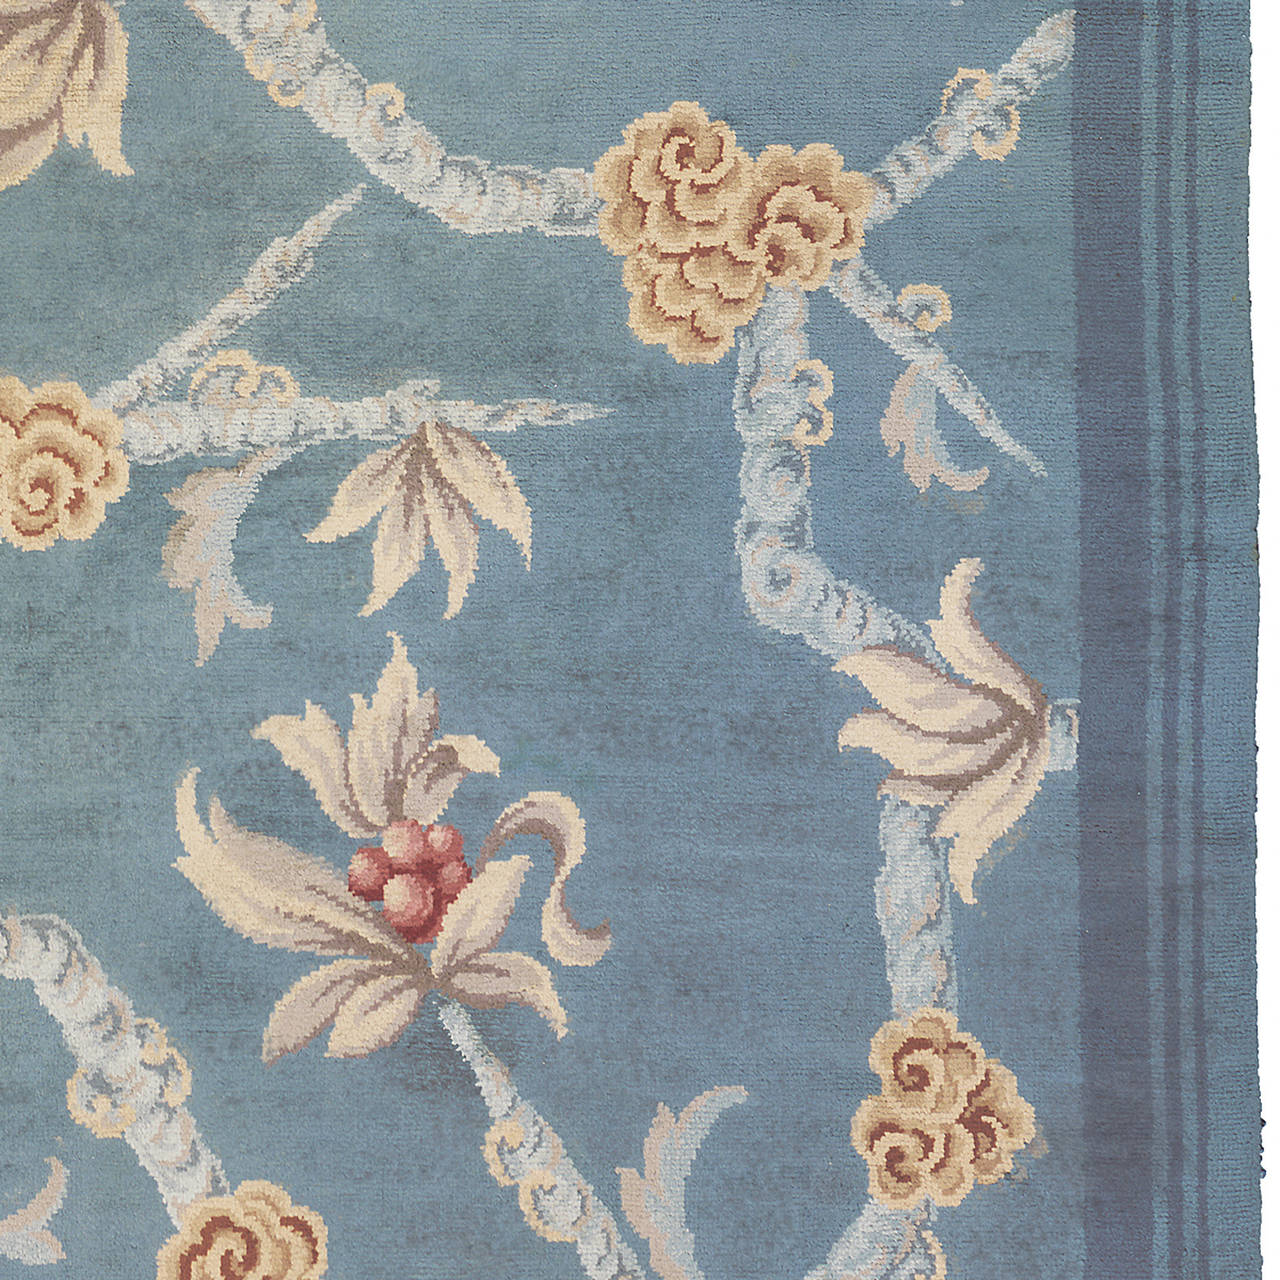 20th Century Viennese Carpet
Austria, circa 1930
All over floral design